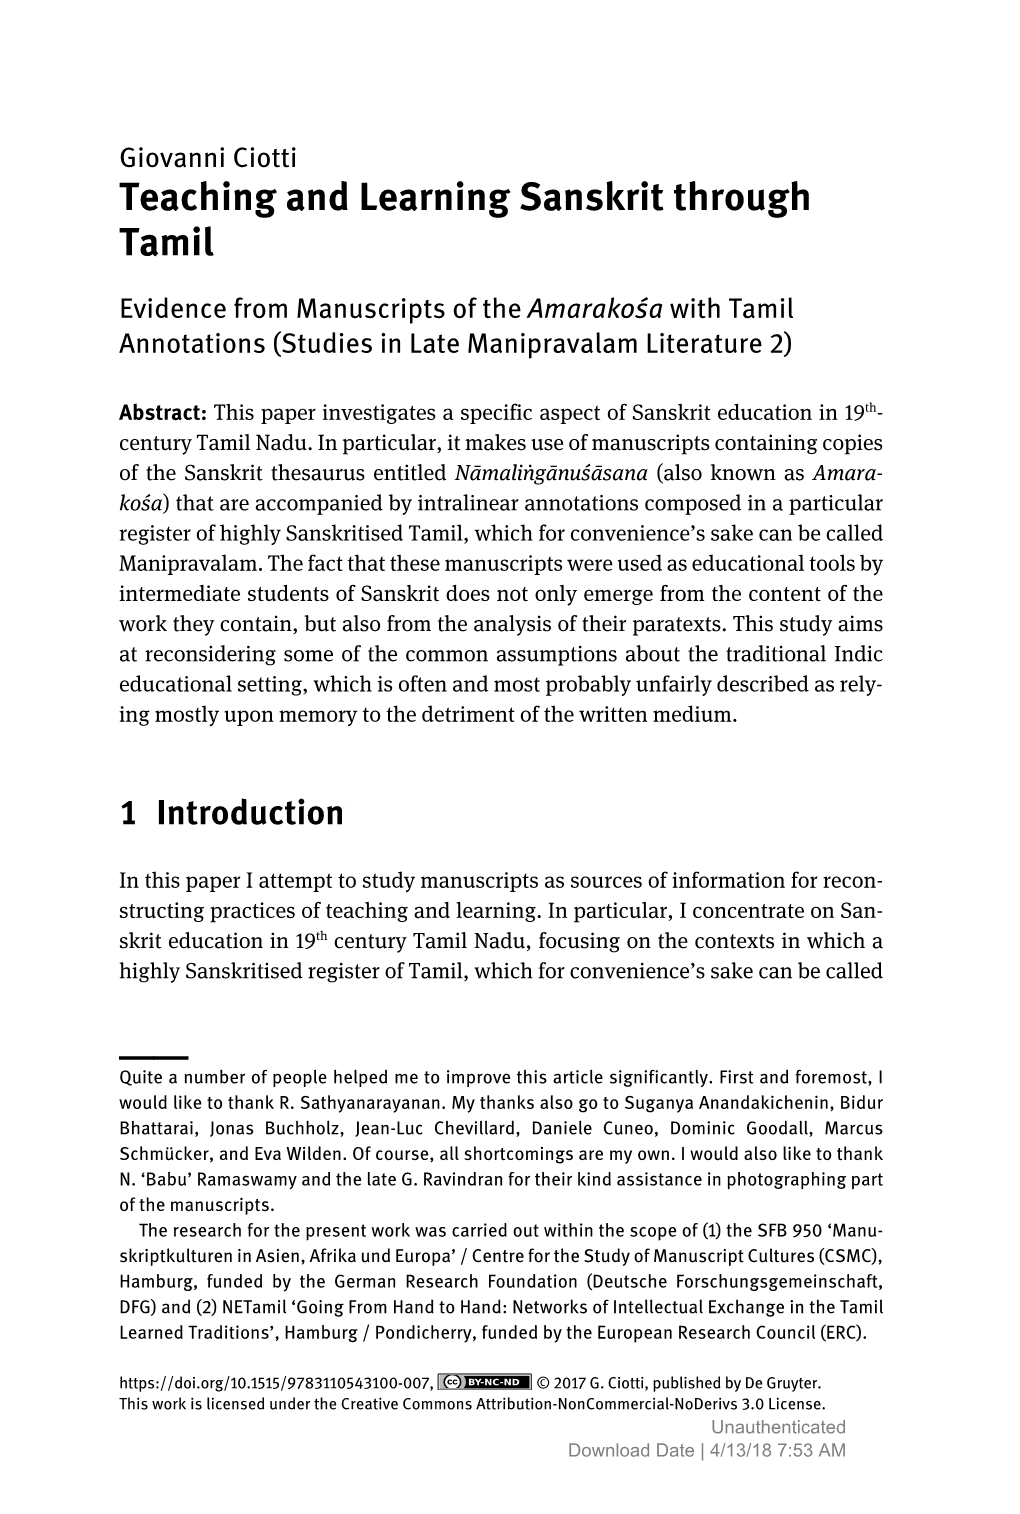 Teaching and Learning Sanskrit Through Tamil